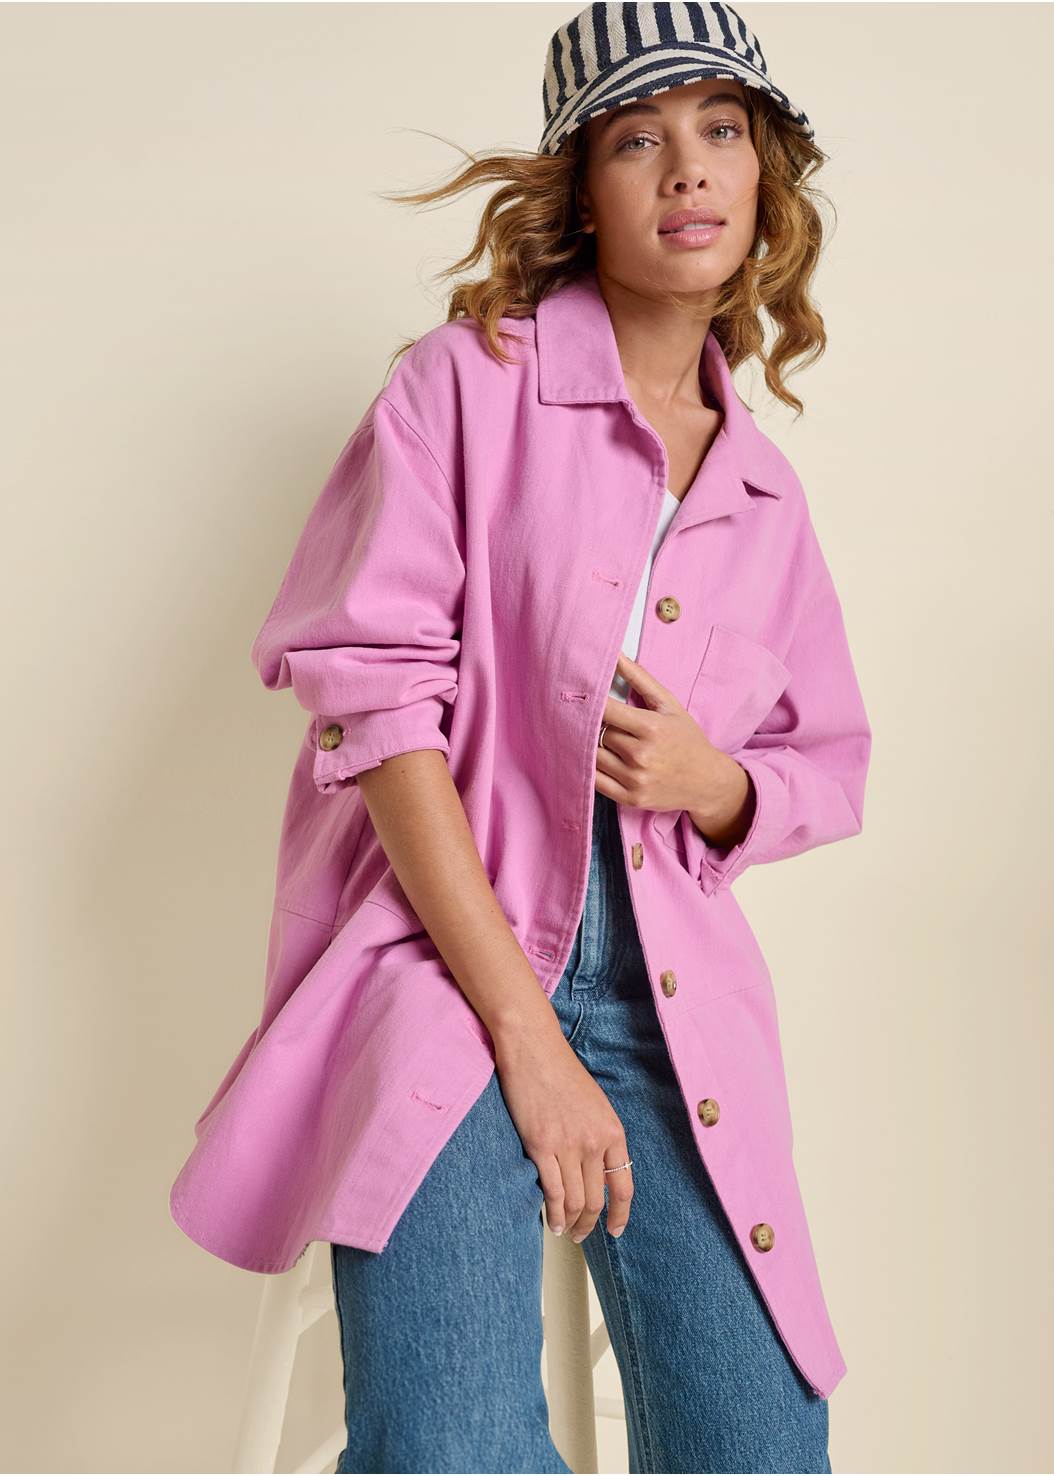 Missguided Purple Oversized Washed Denim Jacket  Denim fashion women, Denim  outfit, Denim fashion